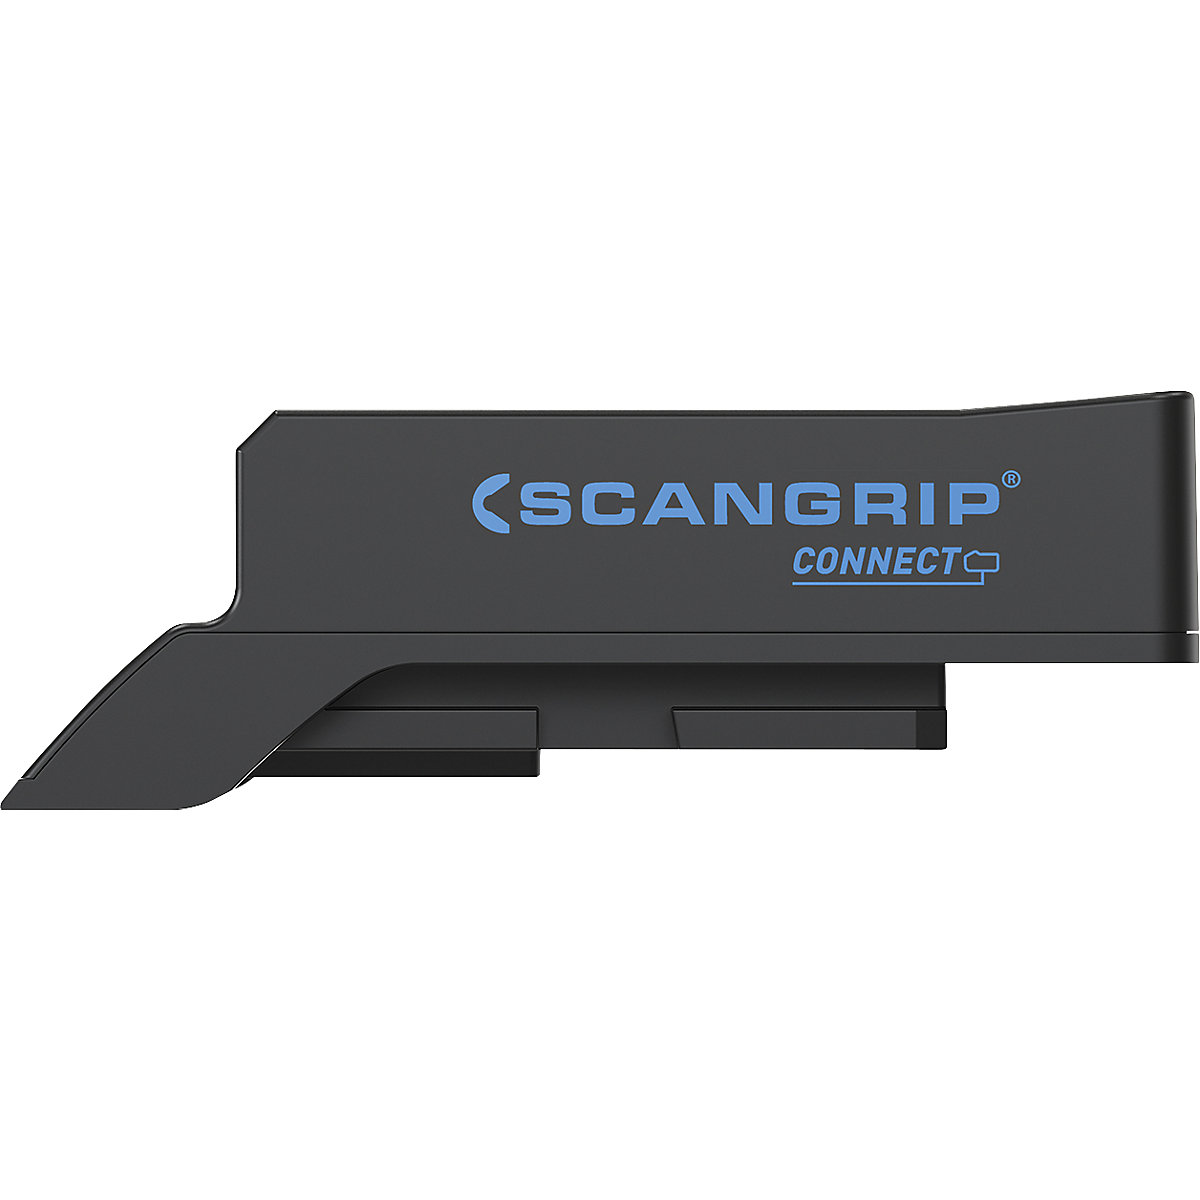 SCANGRIP SMART CONNECTOR – SCANGRIP (Imagine produs 2)-1